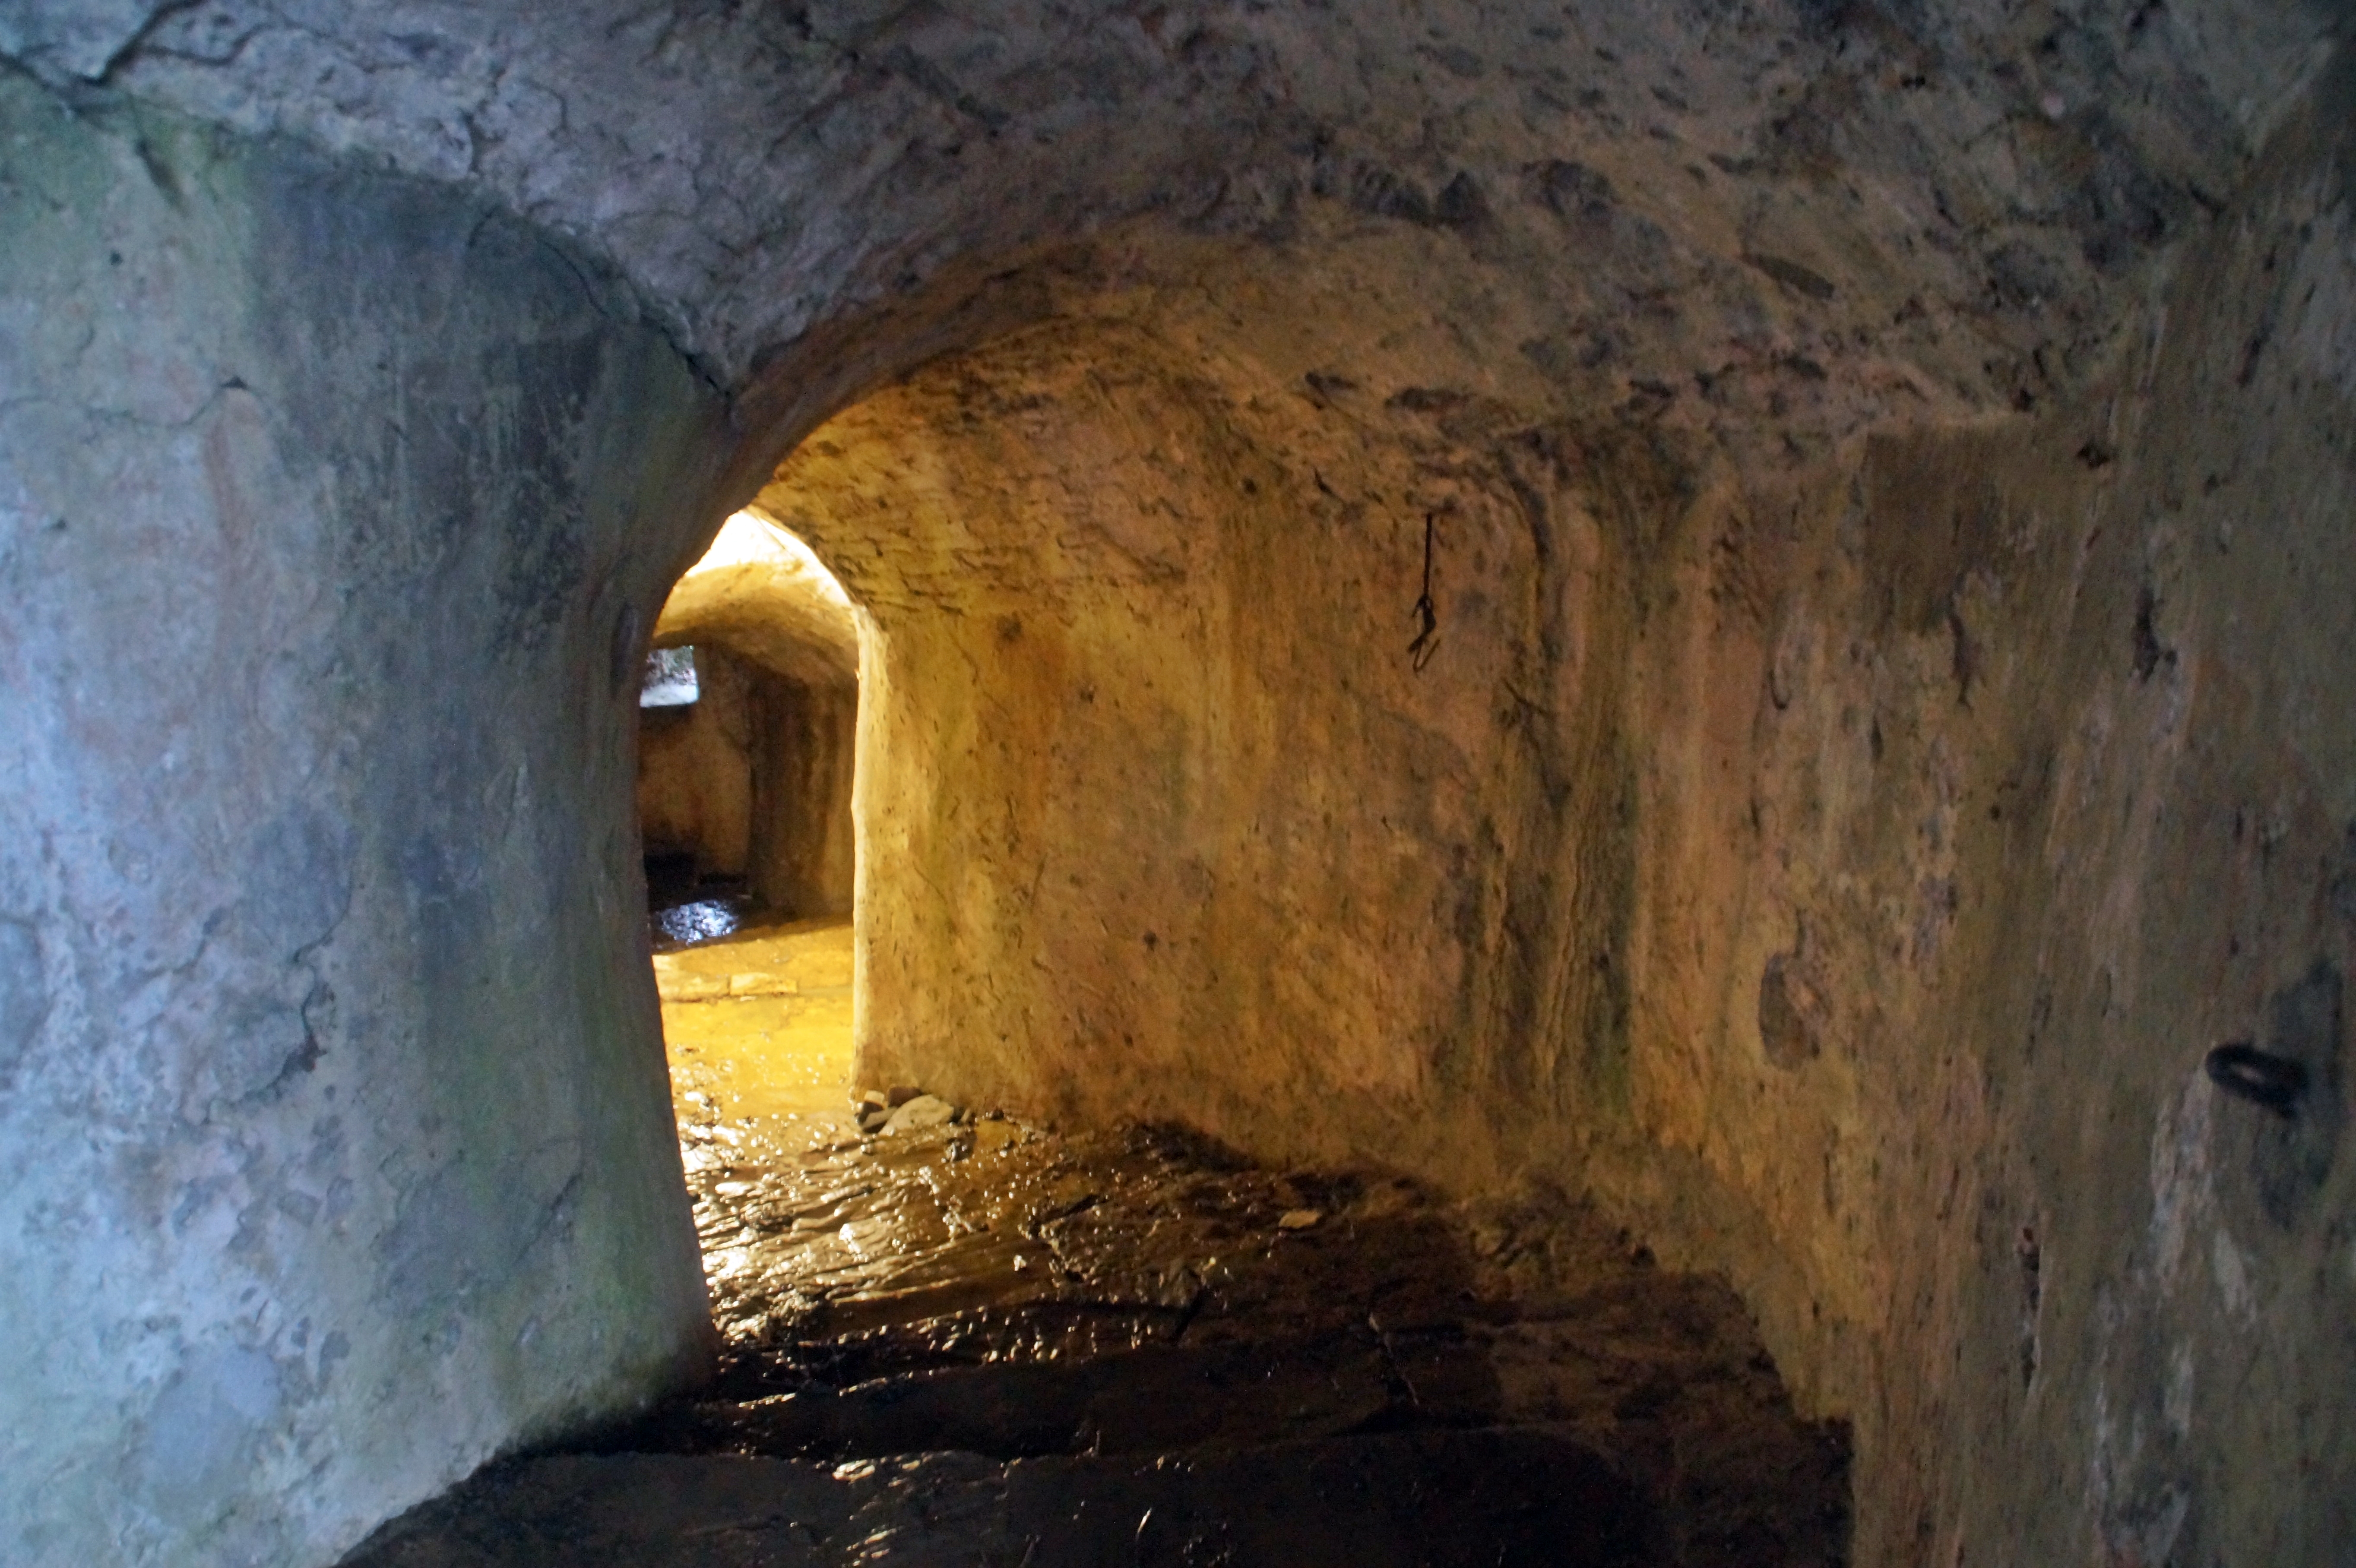 A secret passage that was open for tourists to explore